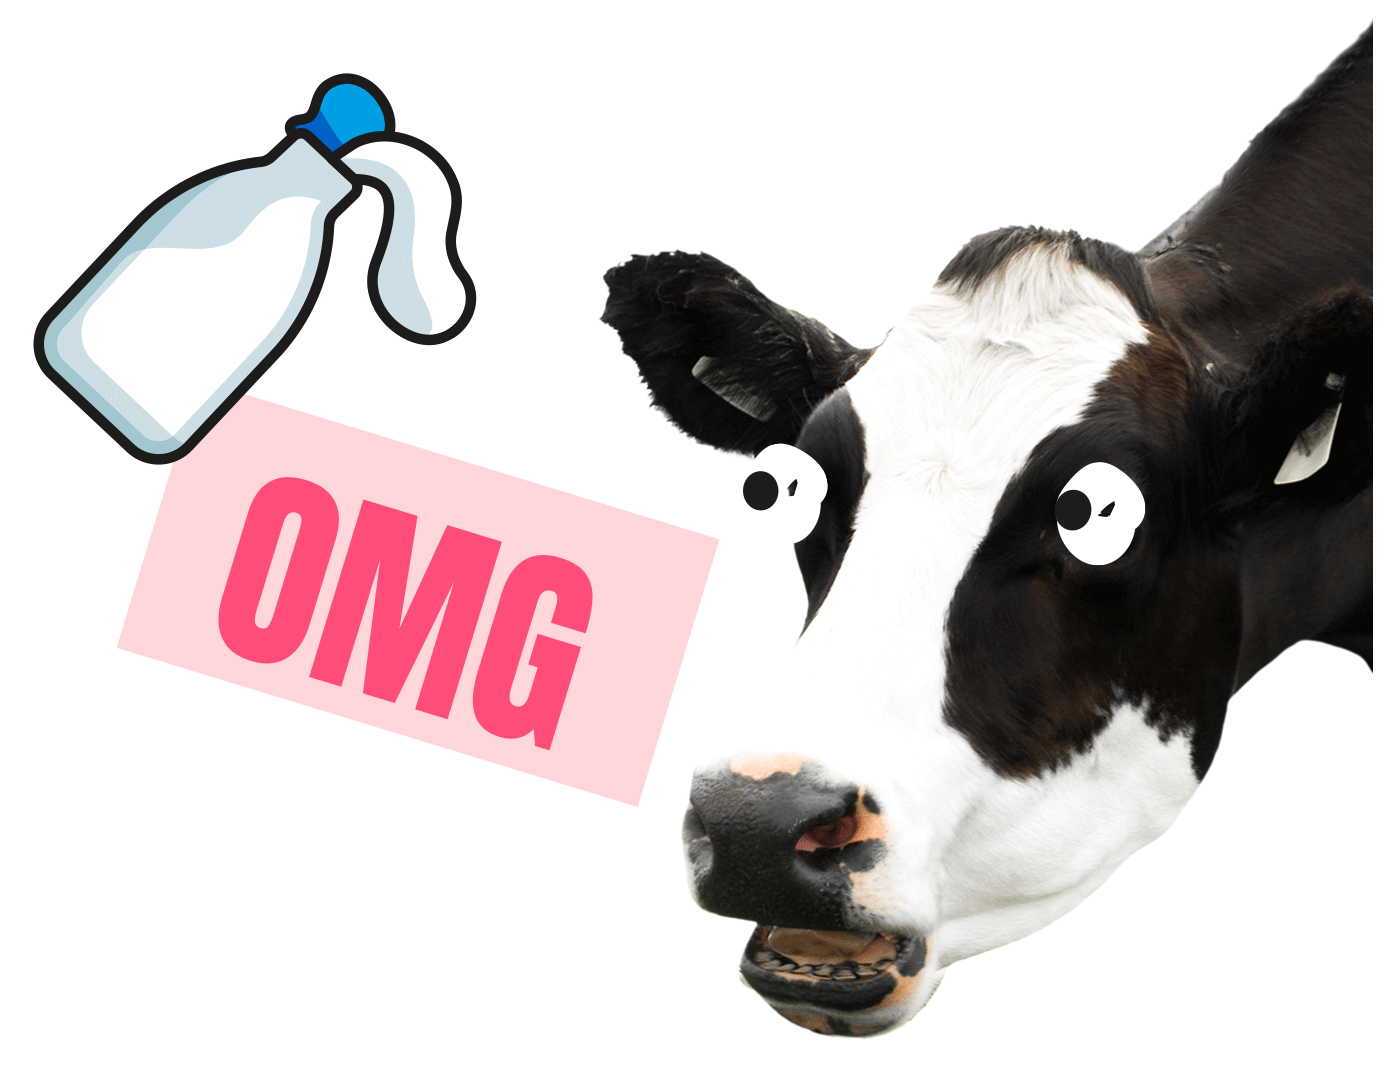 Cow shocked bottle